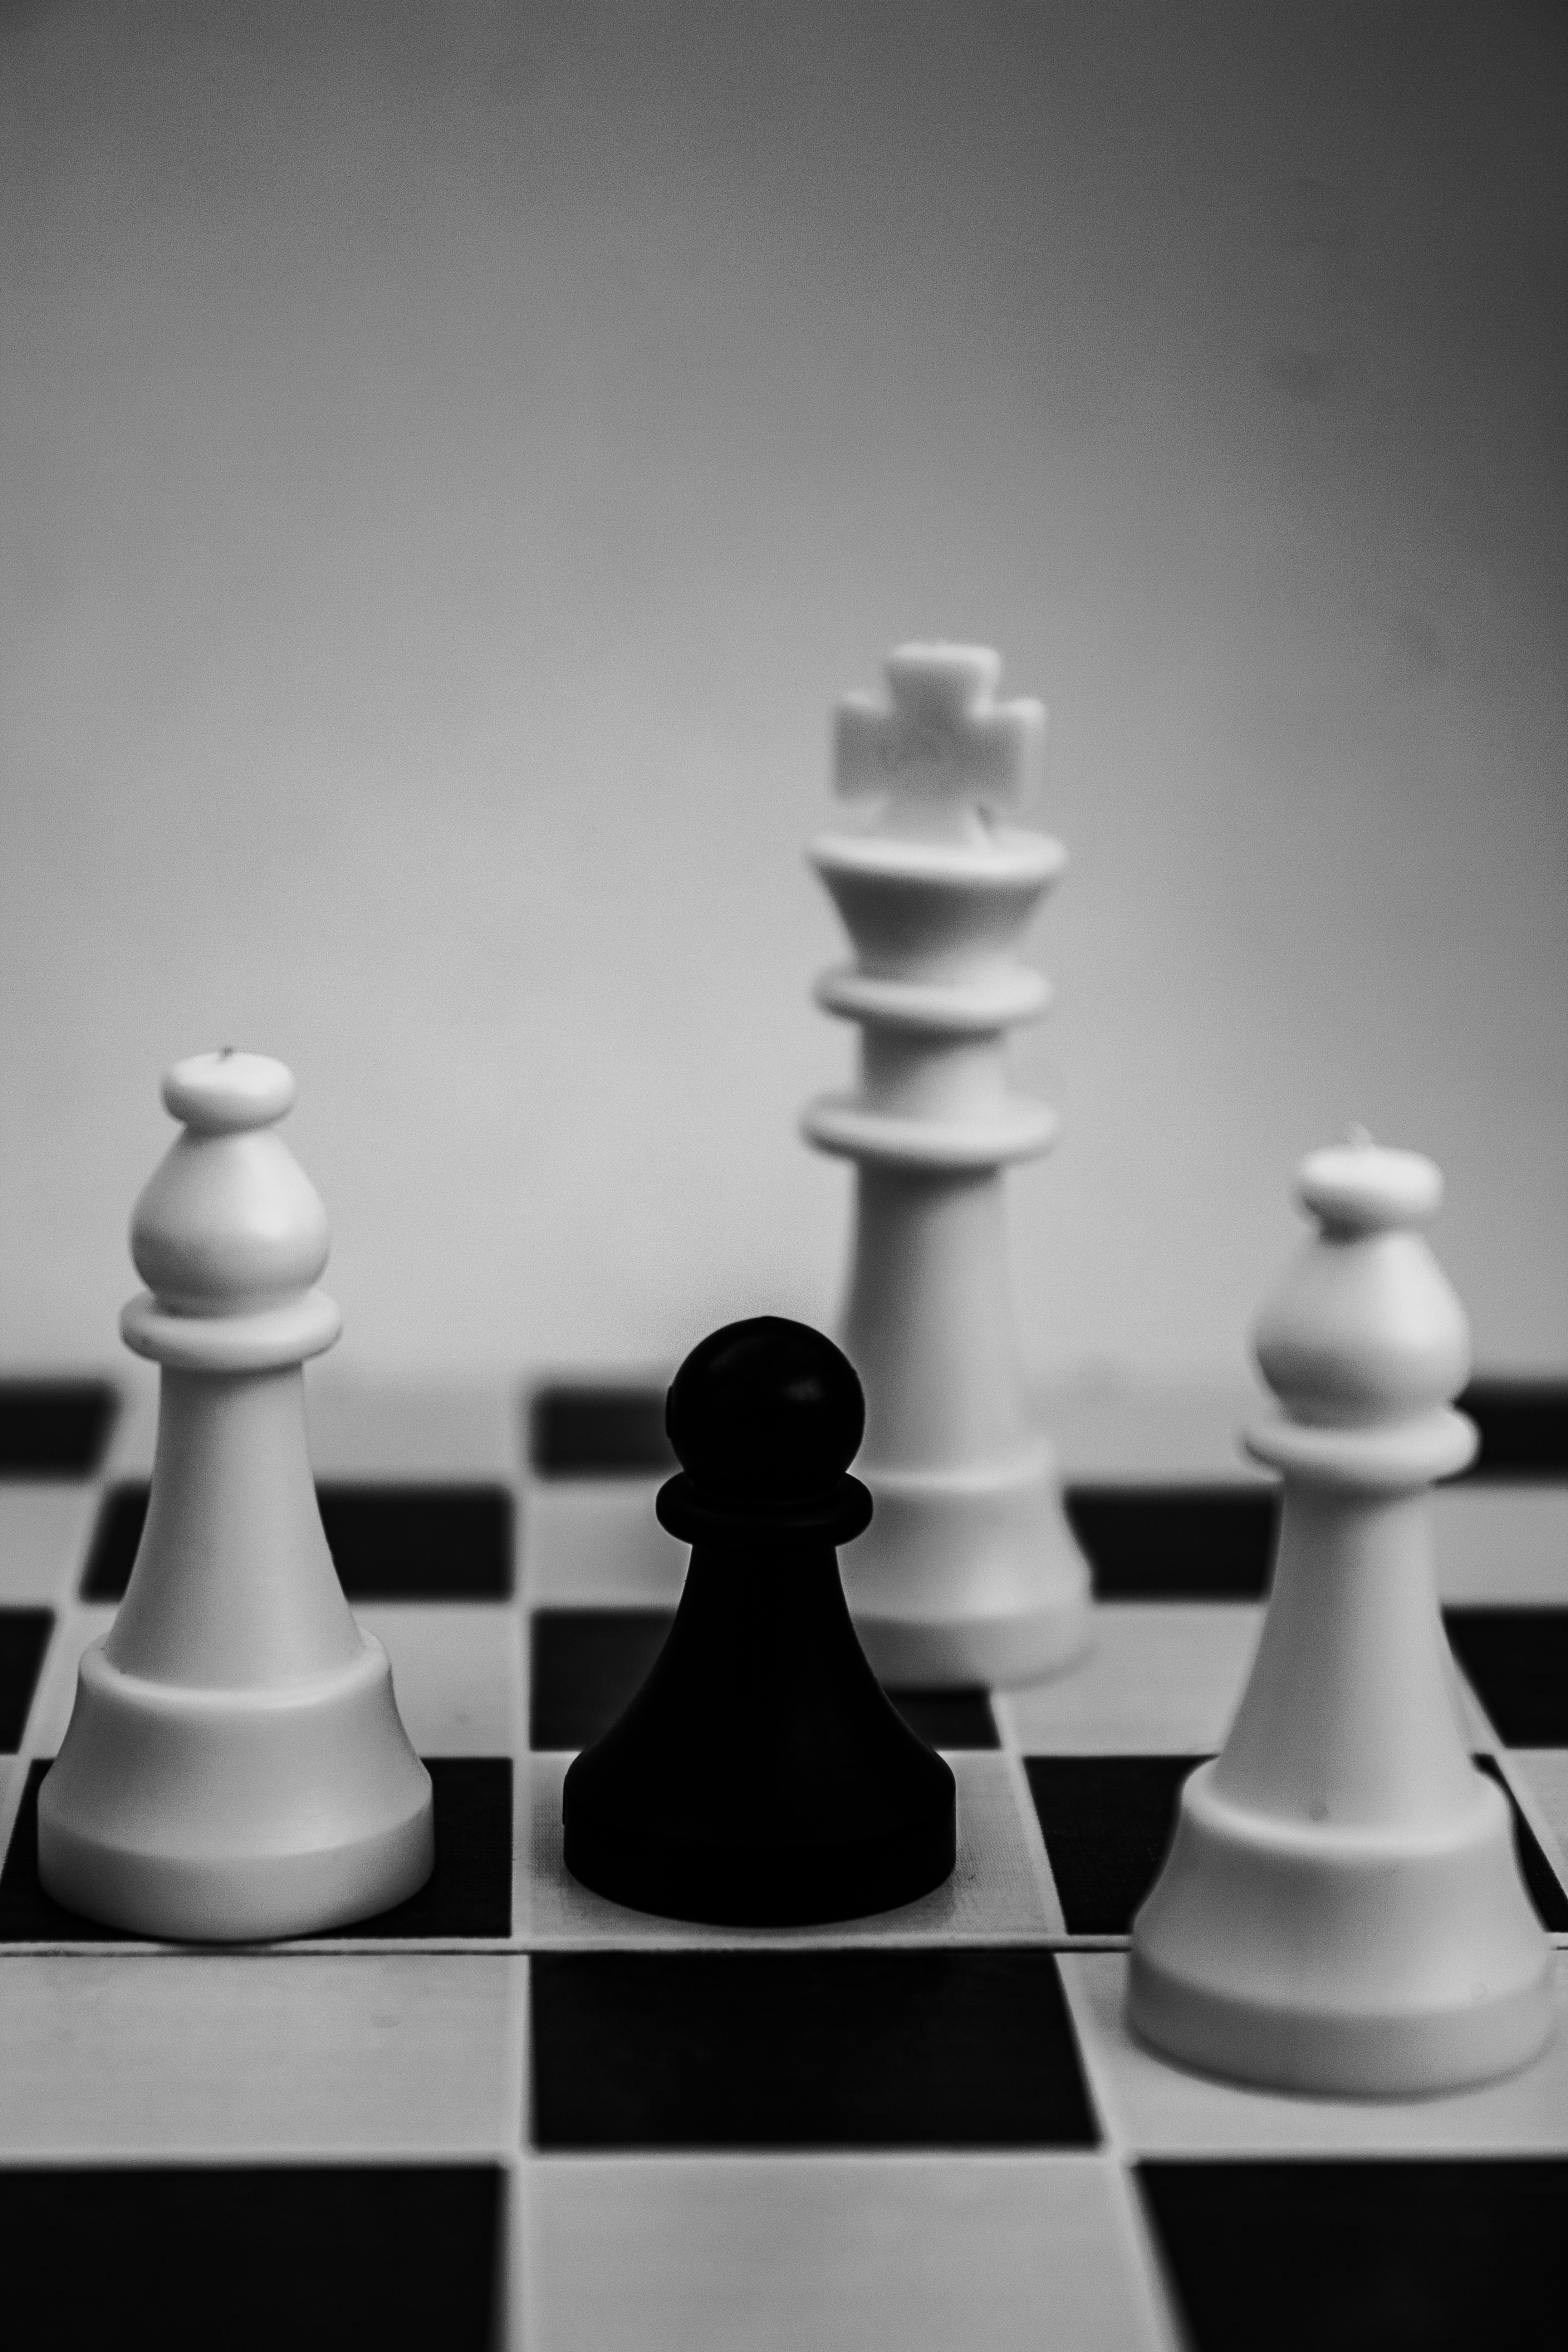 White chess pieces surrounding single black pawn piece